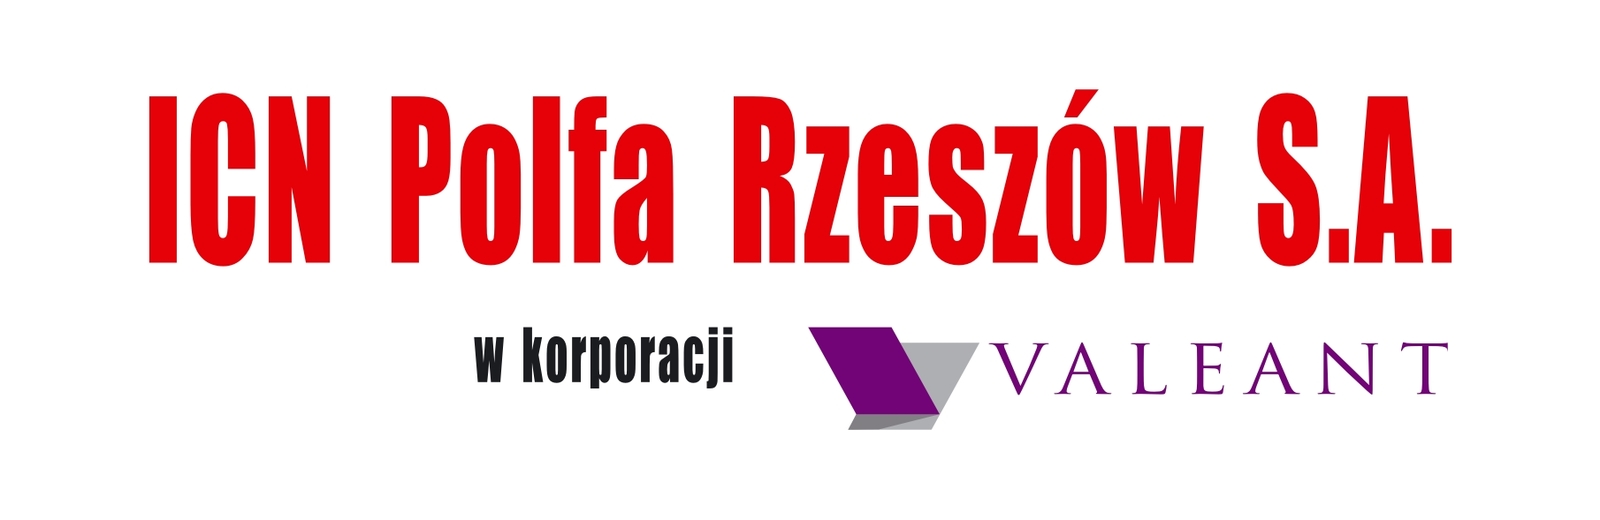 icn_polfa_rzeszow_sa_logo.jpg